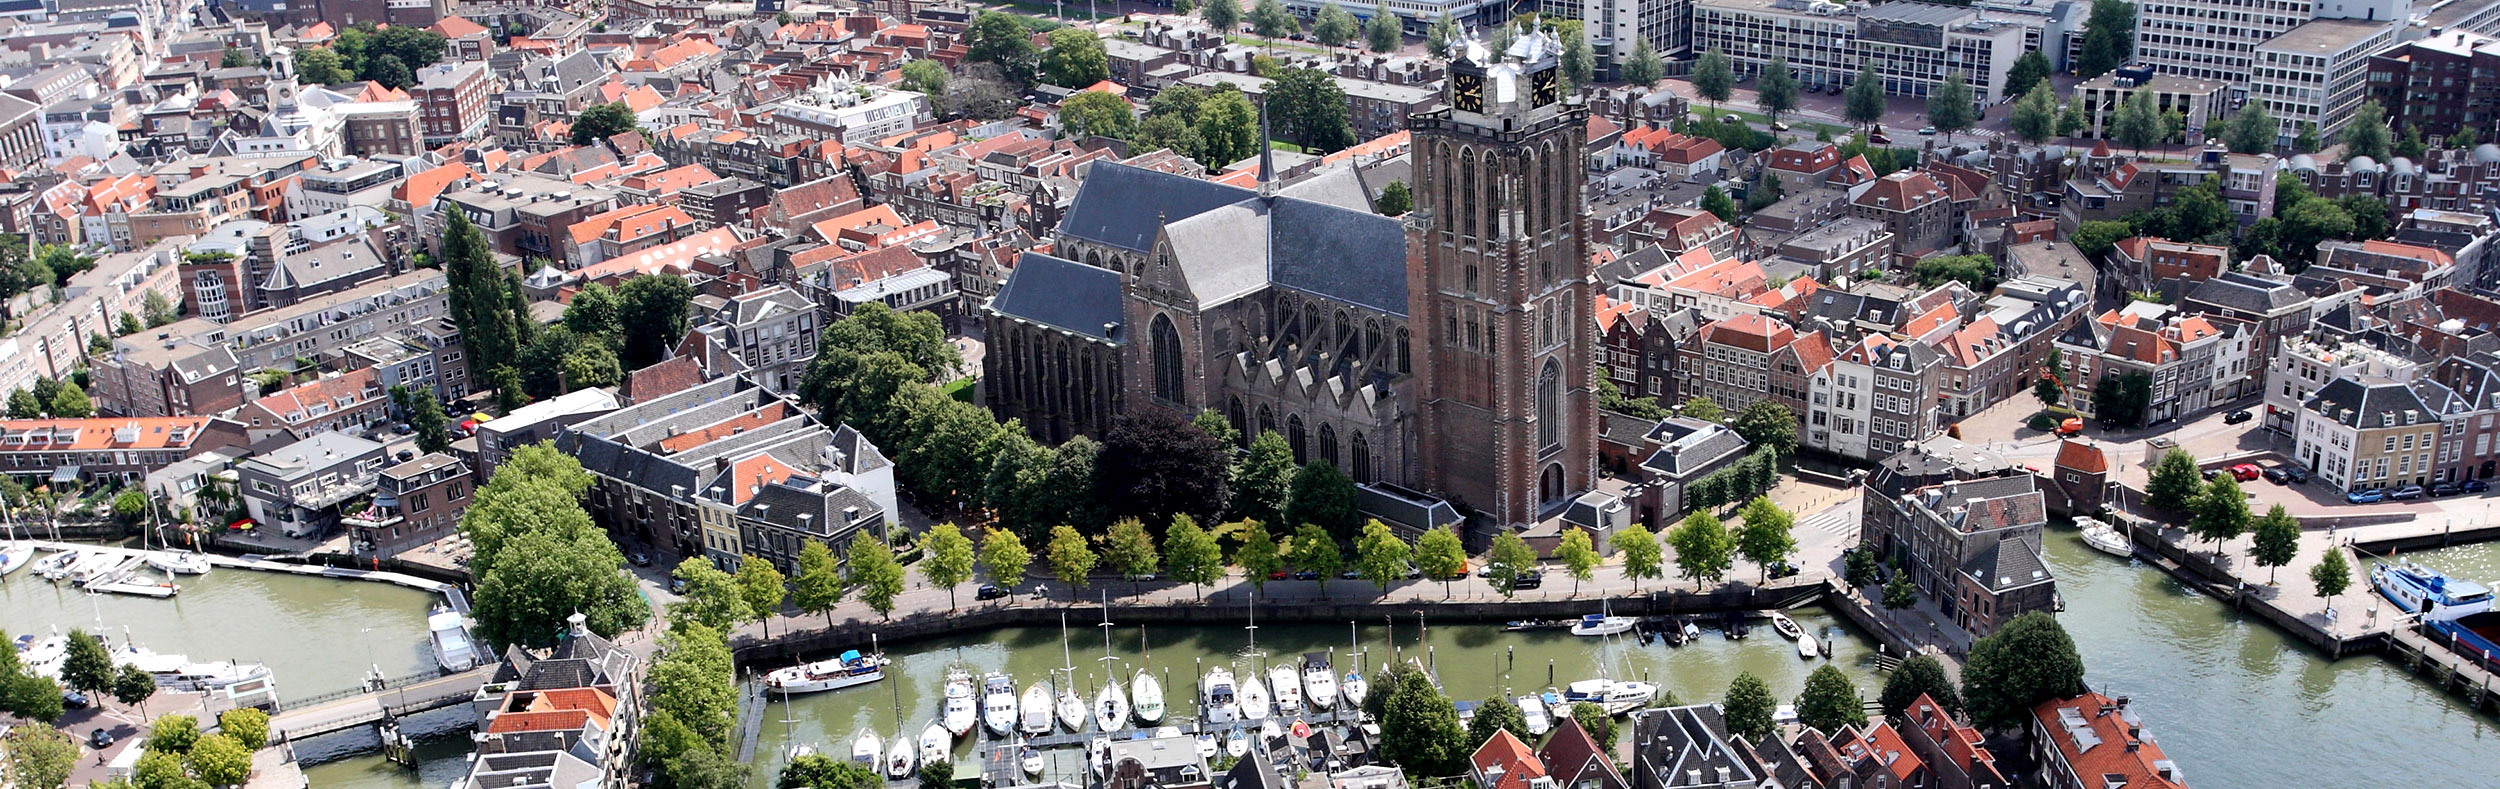 Discover the historic city center of Dordrecht